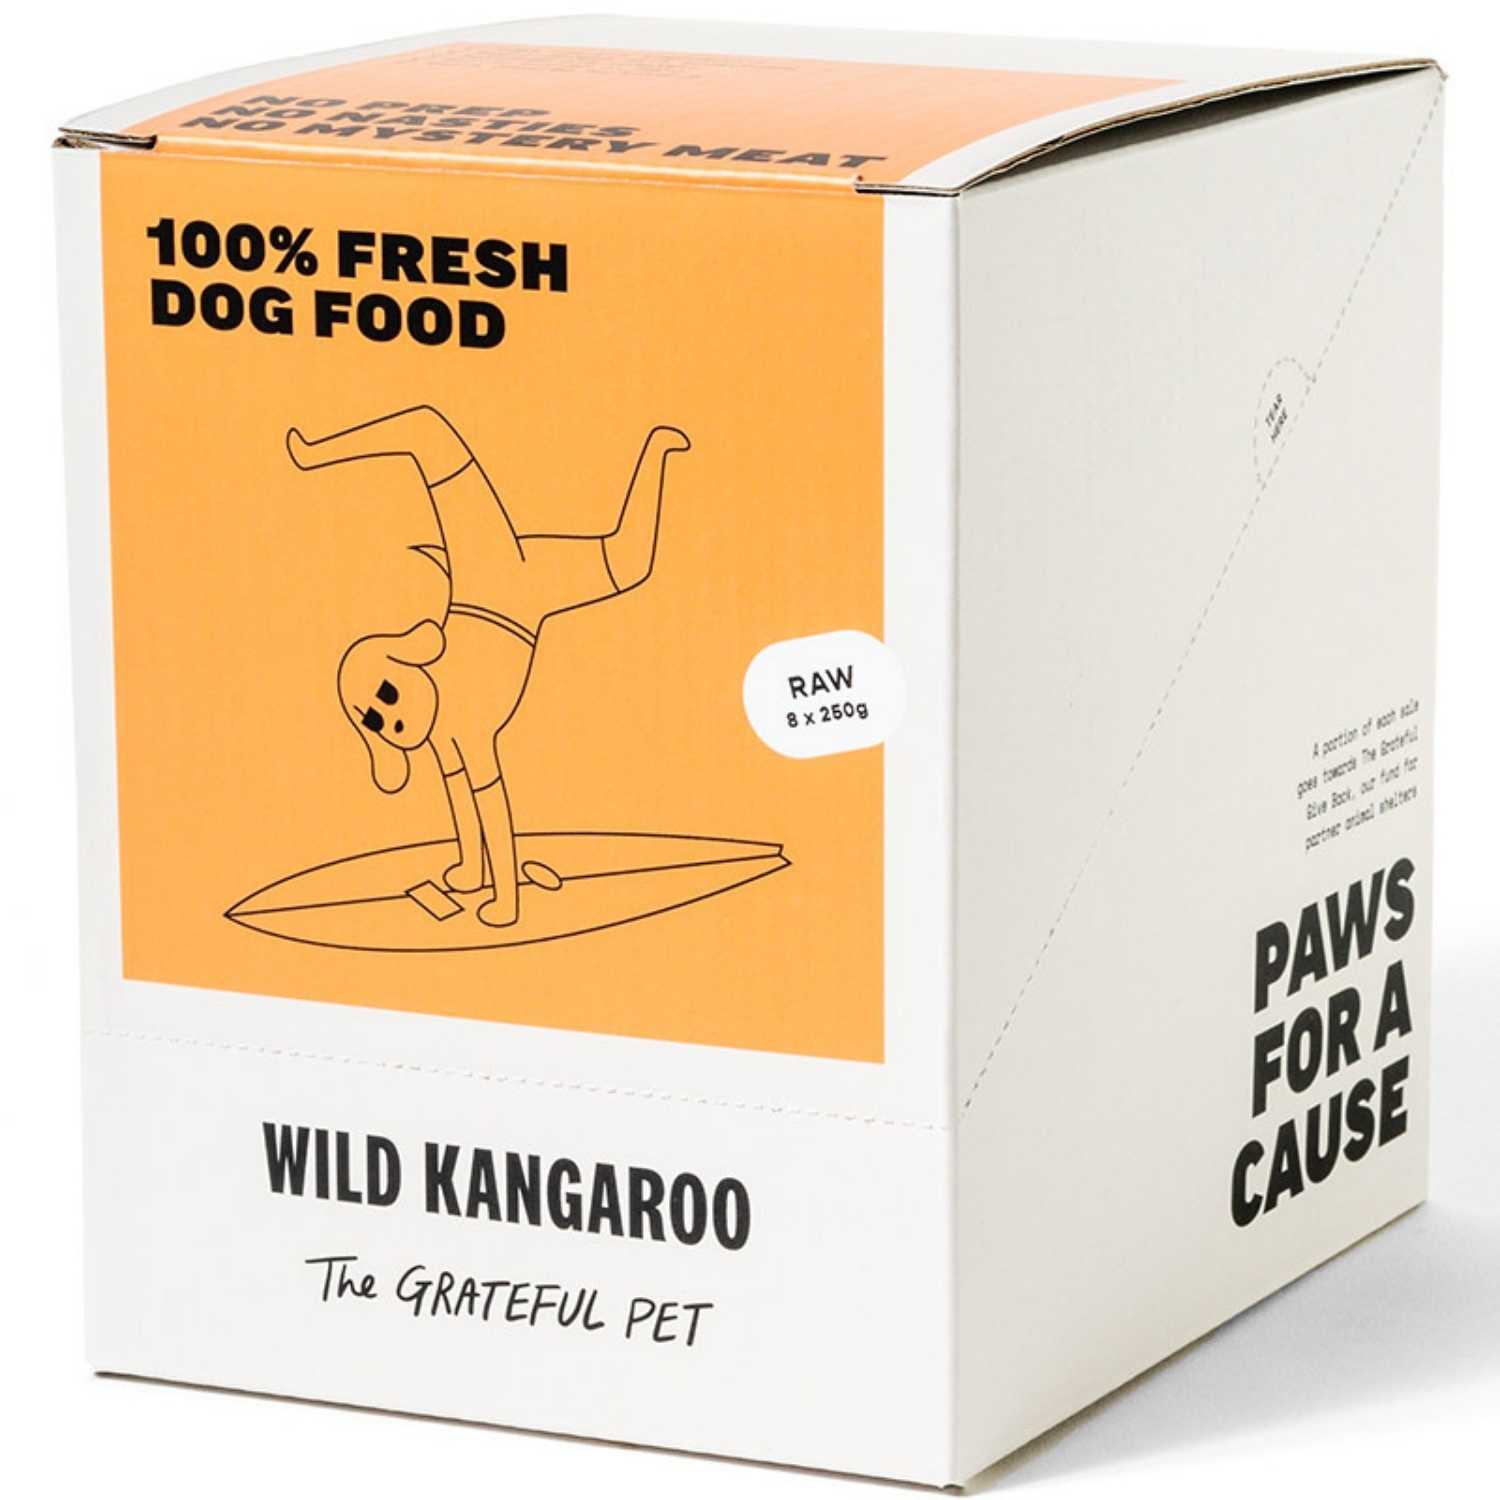 The Grateful Pet - Raw (Wild Kangaroo) - Dog (8 x 250g Pouch) Food (Case)